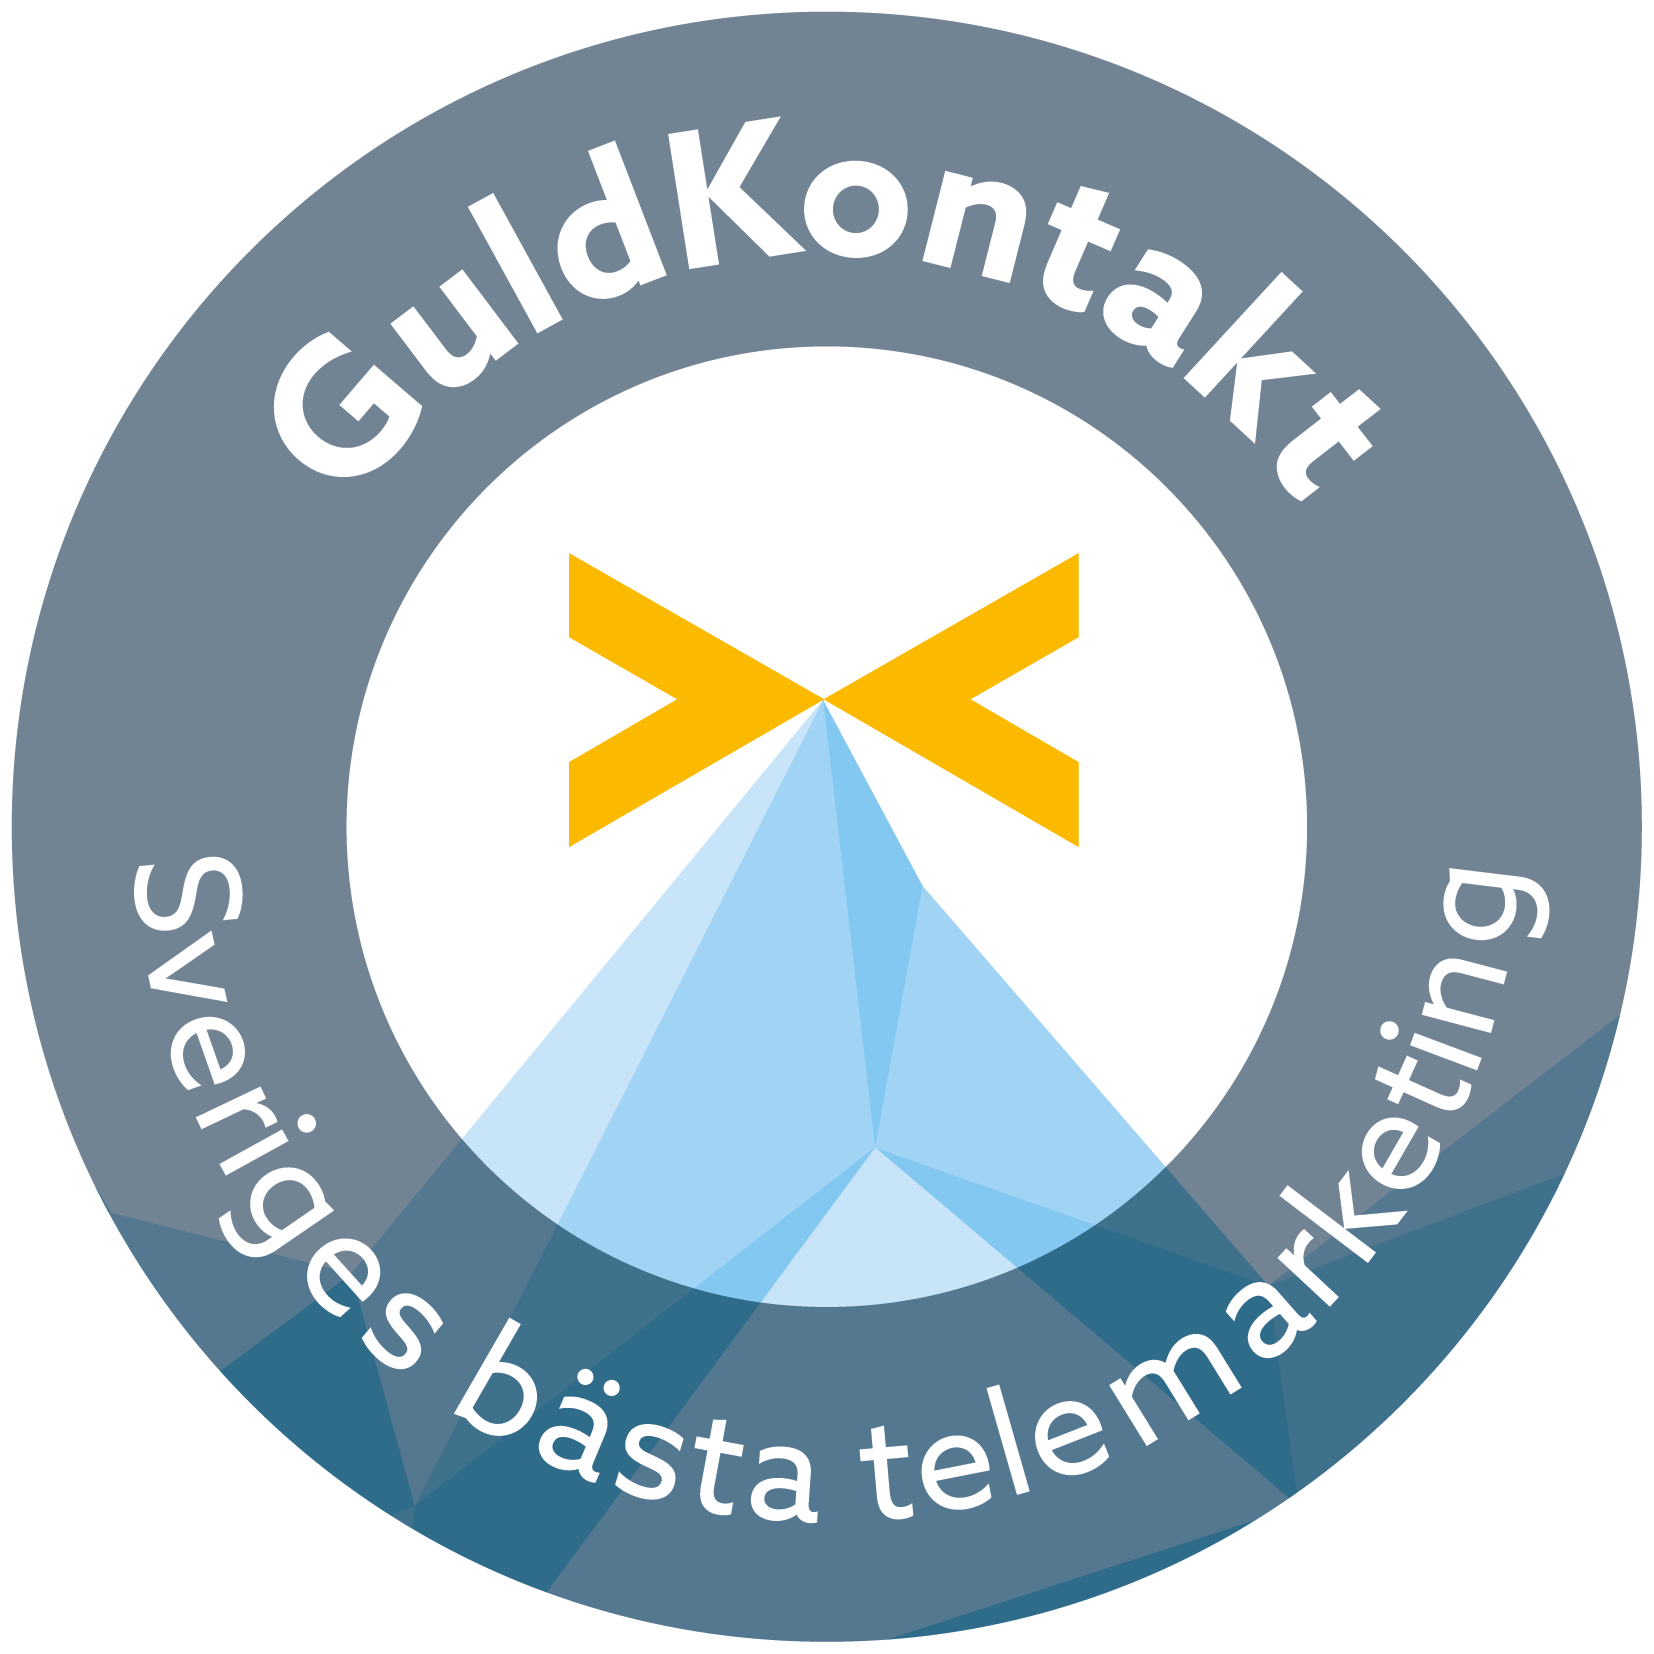 GuldKontakt_Sveriges ba¦êsta telemarketing